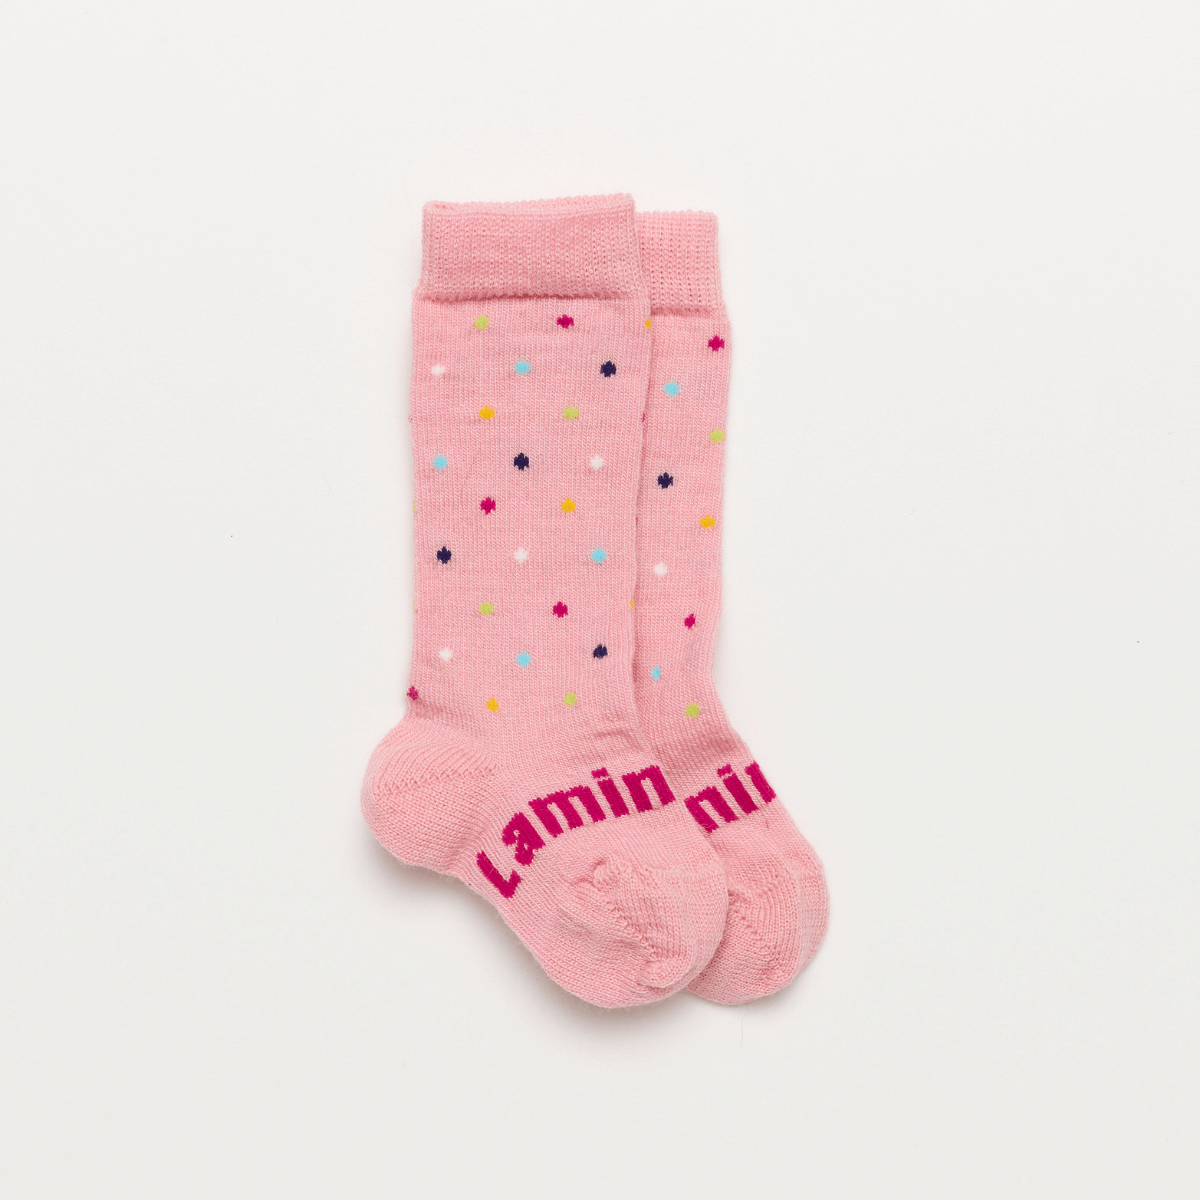 merino wool baby socks knee-high pink nz aus